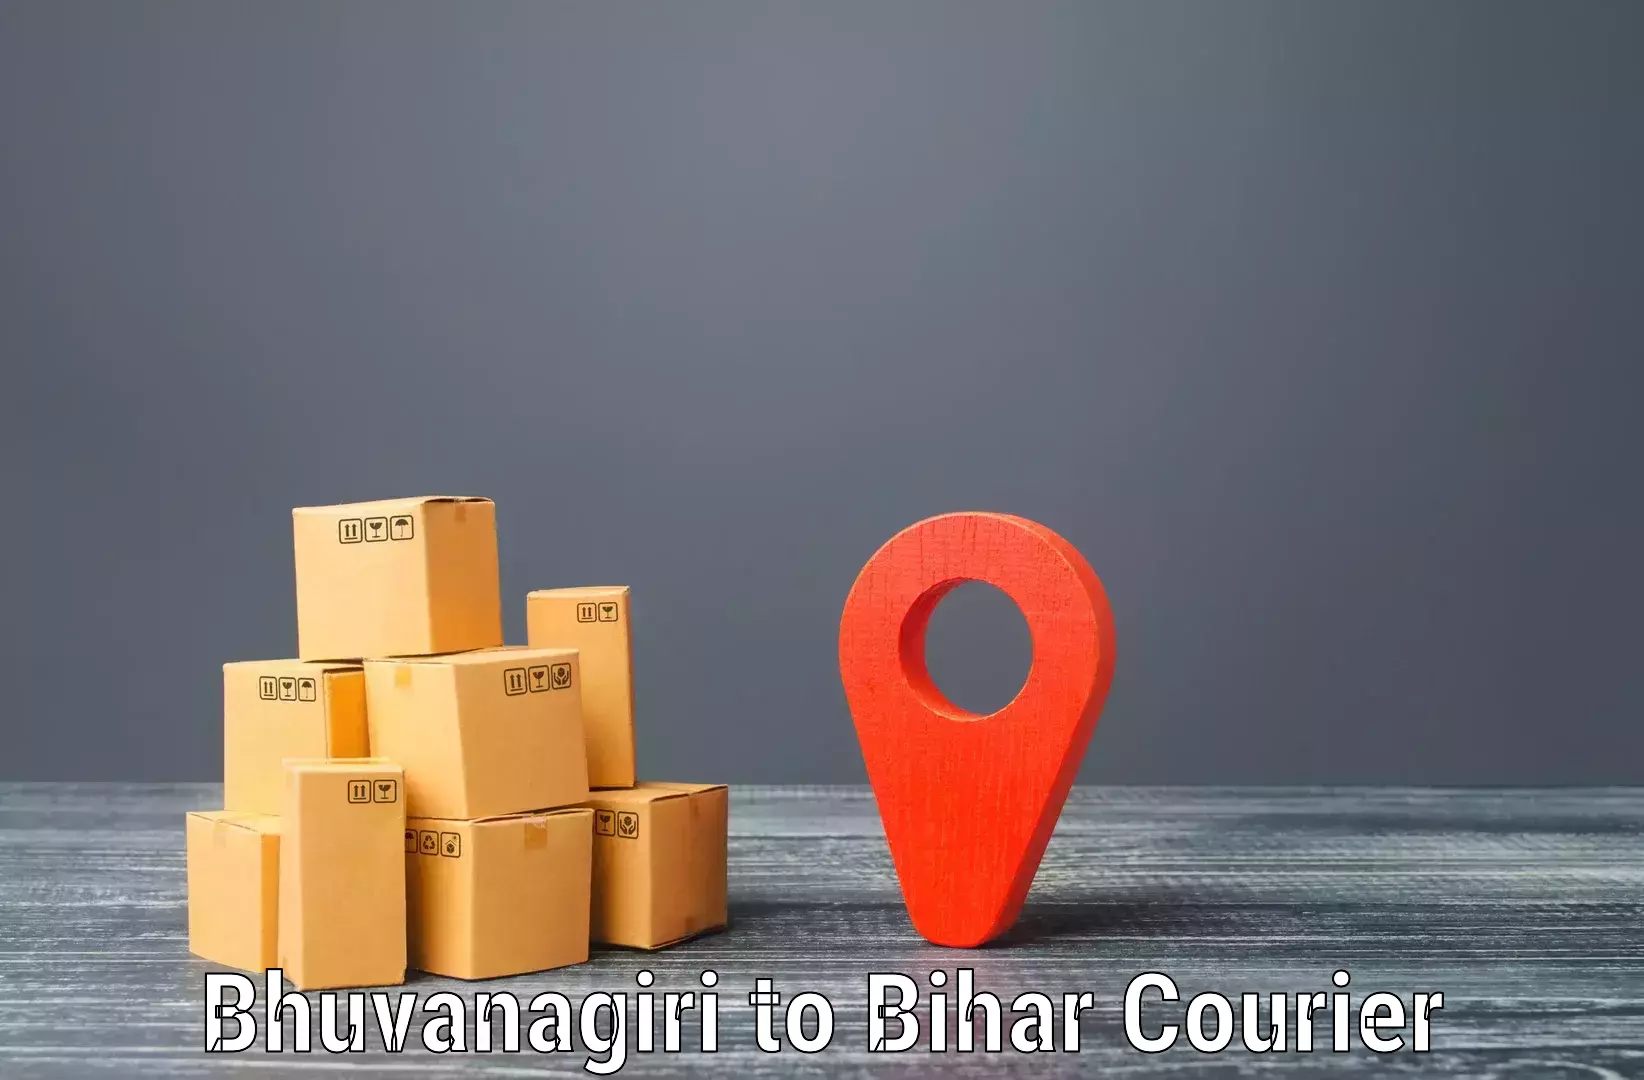 Courier service comparison Bhuvanagiri to Kishanganj